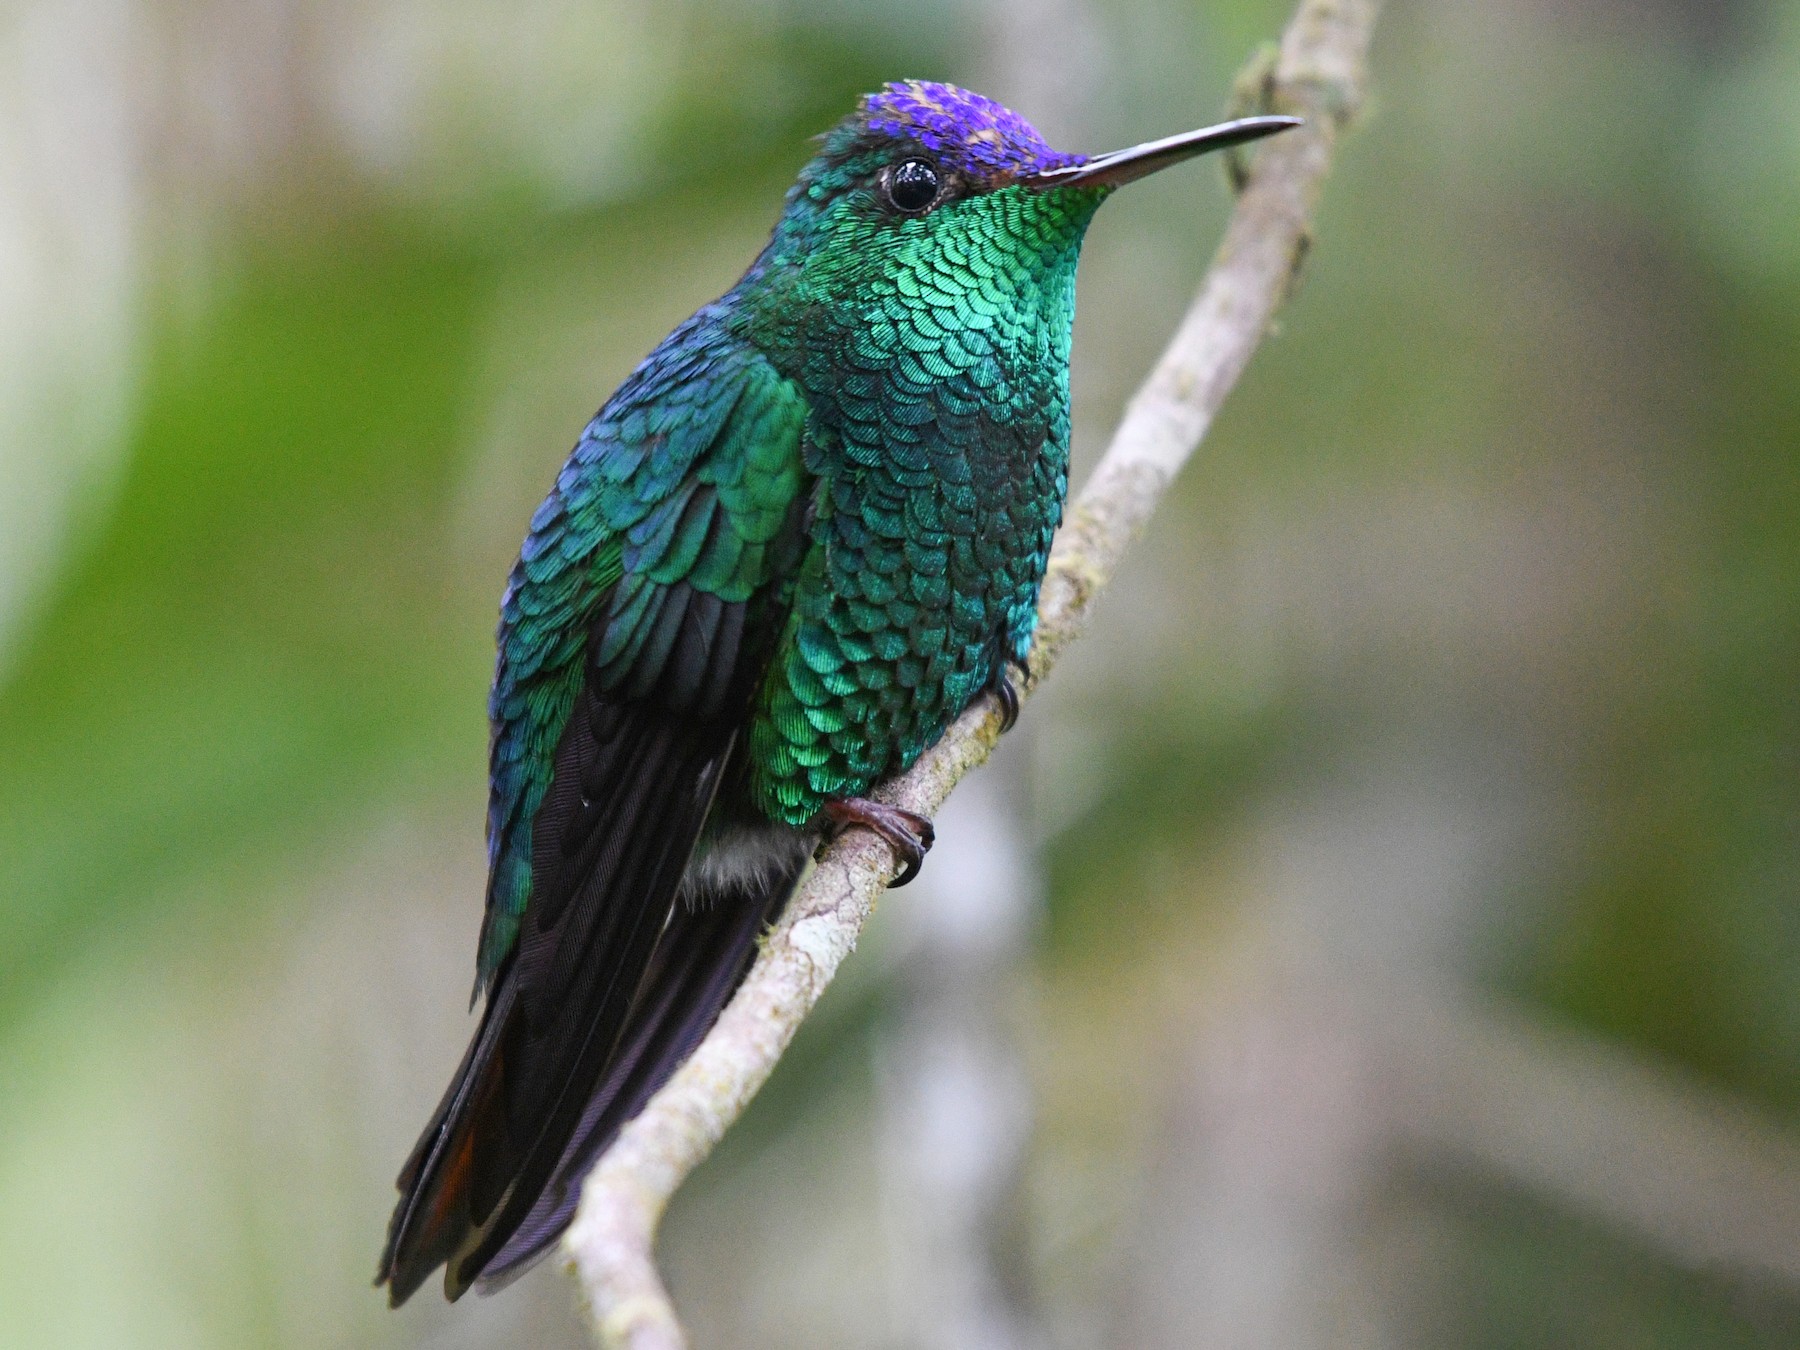 Violet-capped Hummingbird - Josanel Sugasti -photographyandbirdingtourspanama